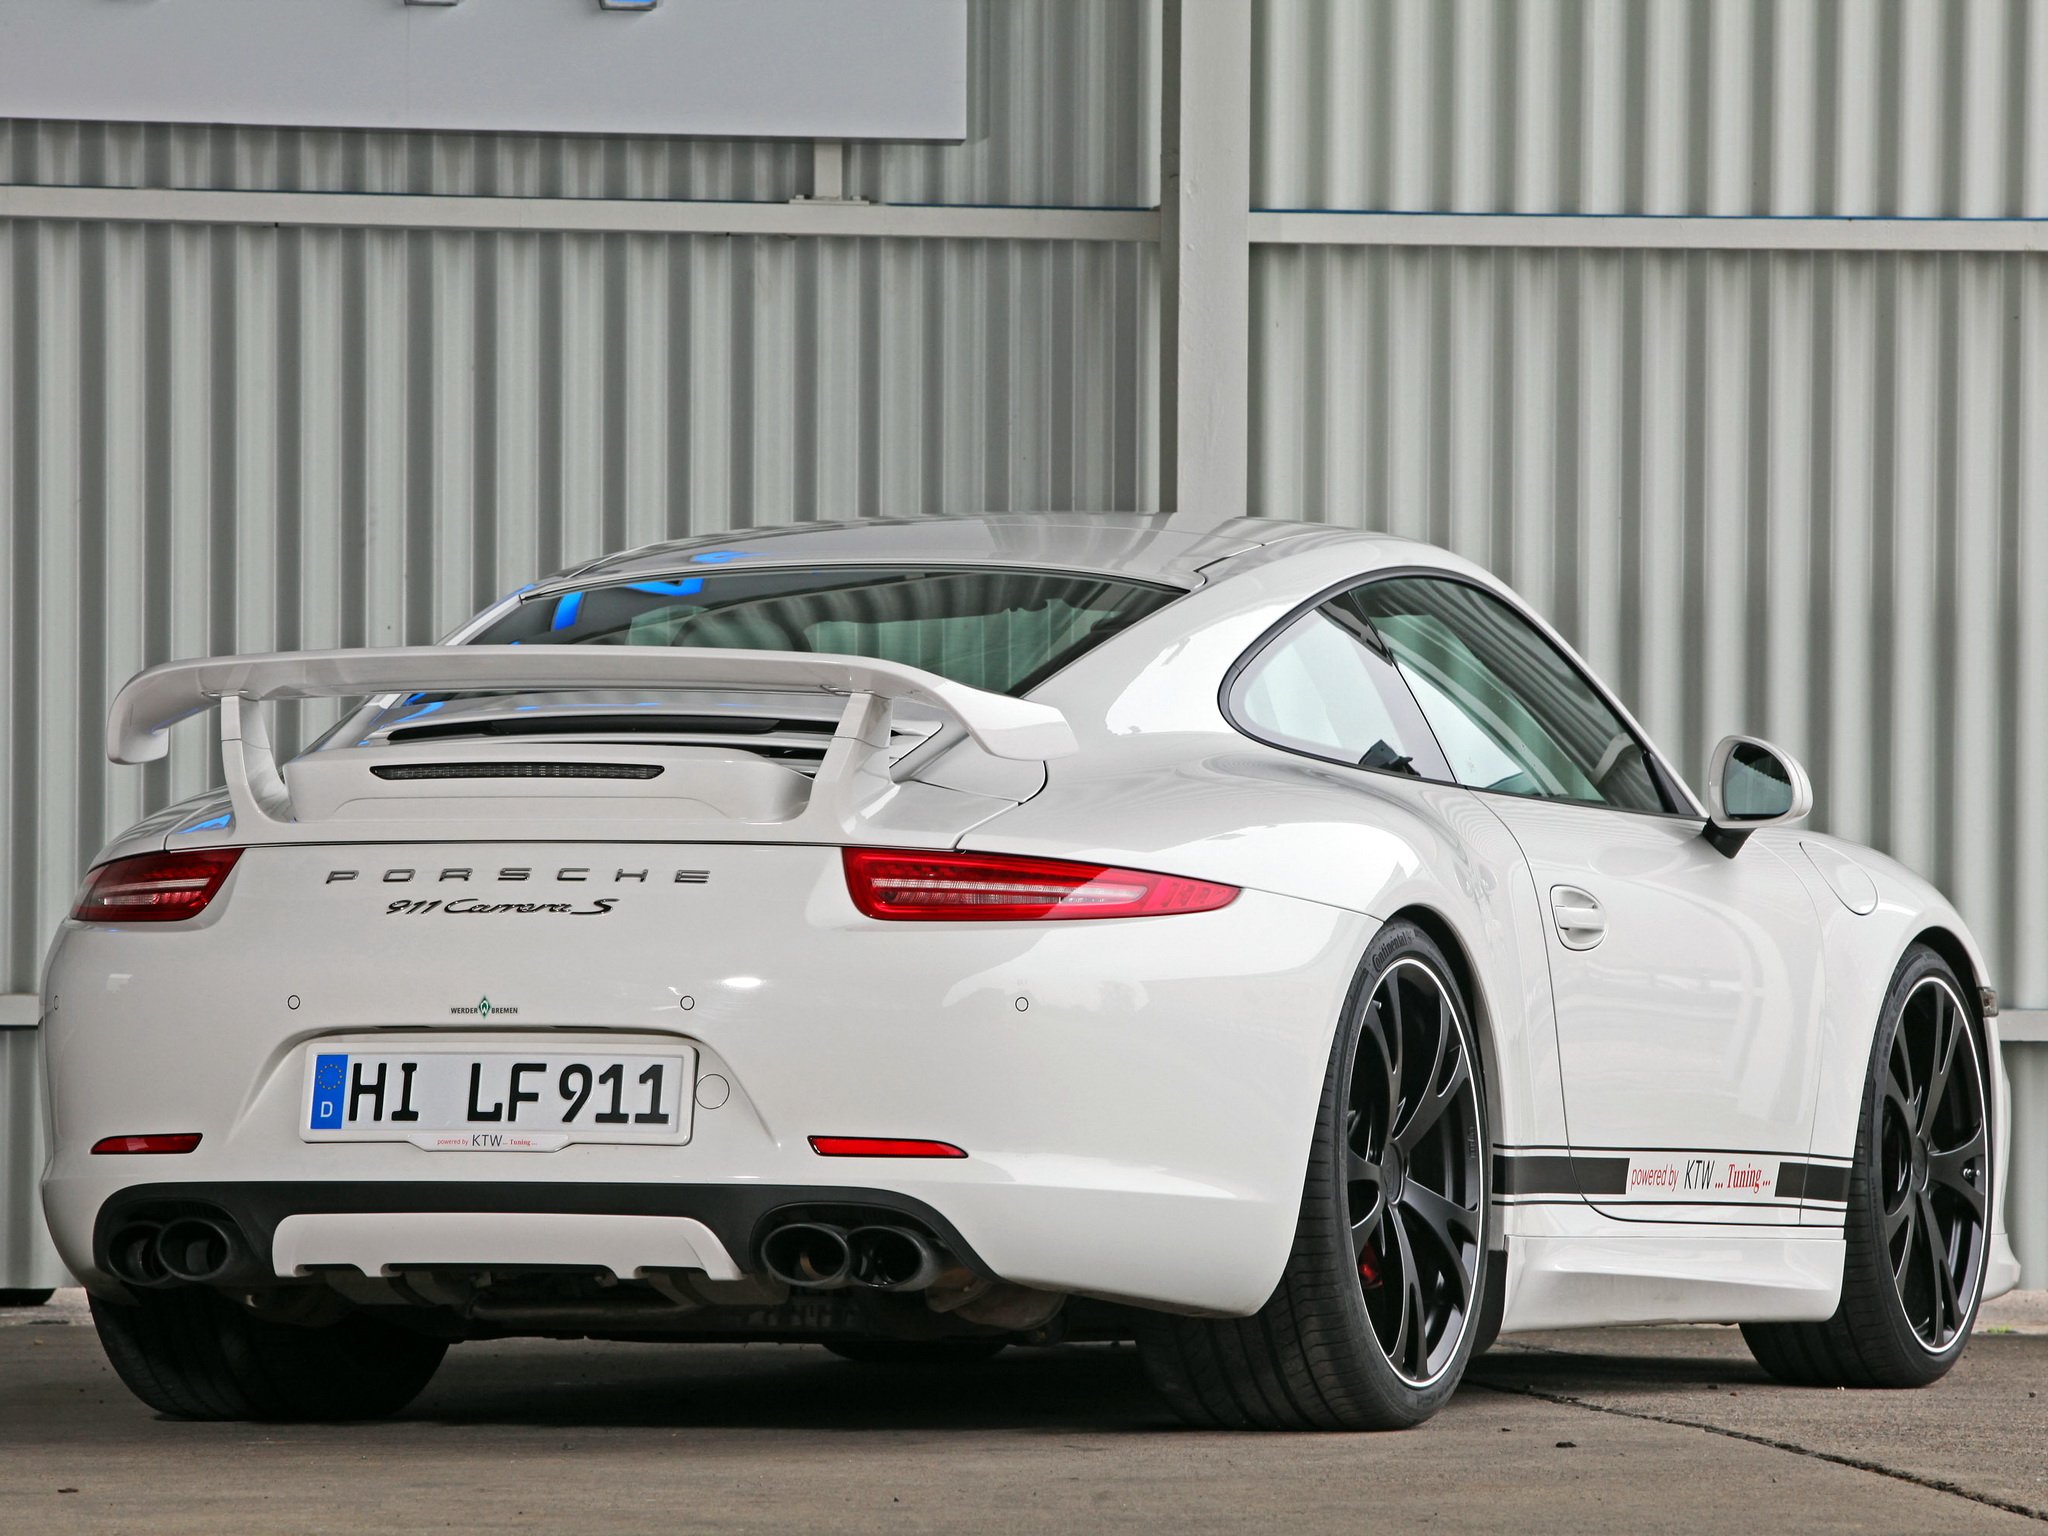 ktw, Tuning, Porsche, 911, Carrera, S, Coupe,  991 , Cars, White, Modified, 2013 Wallpaper